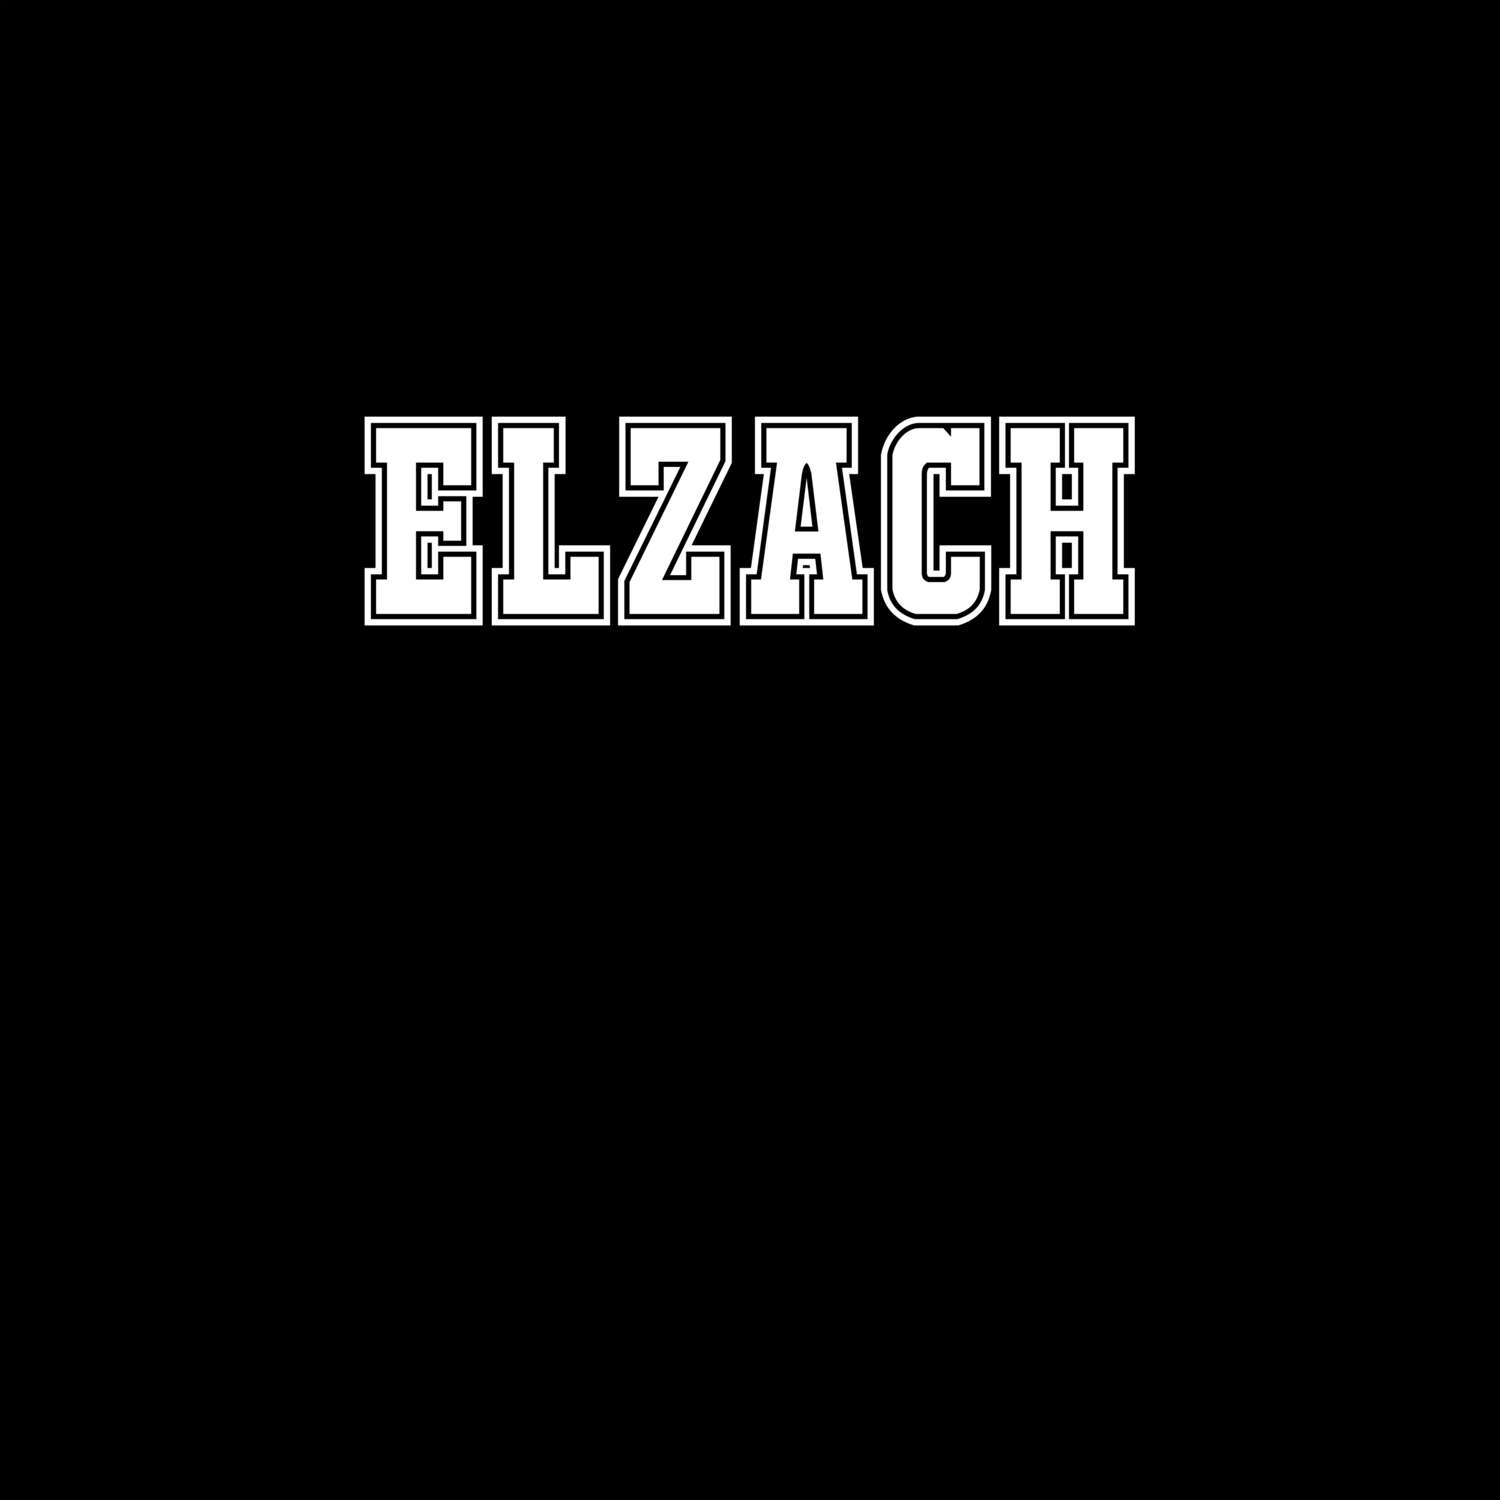 Elzach T-Shirt »Classic«